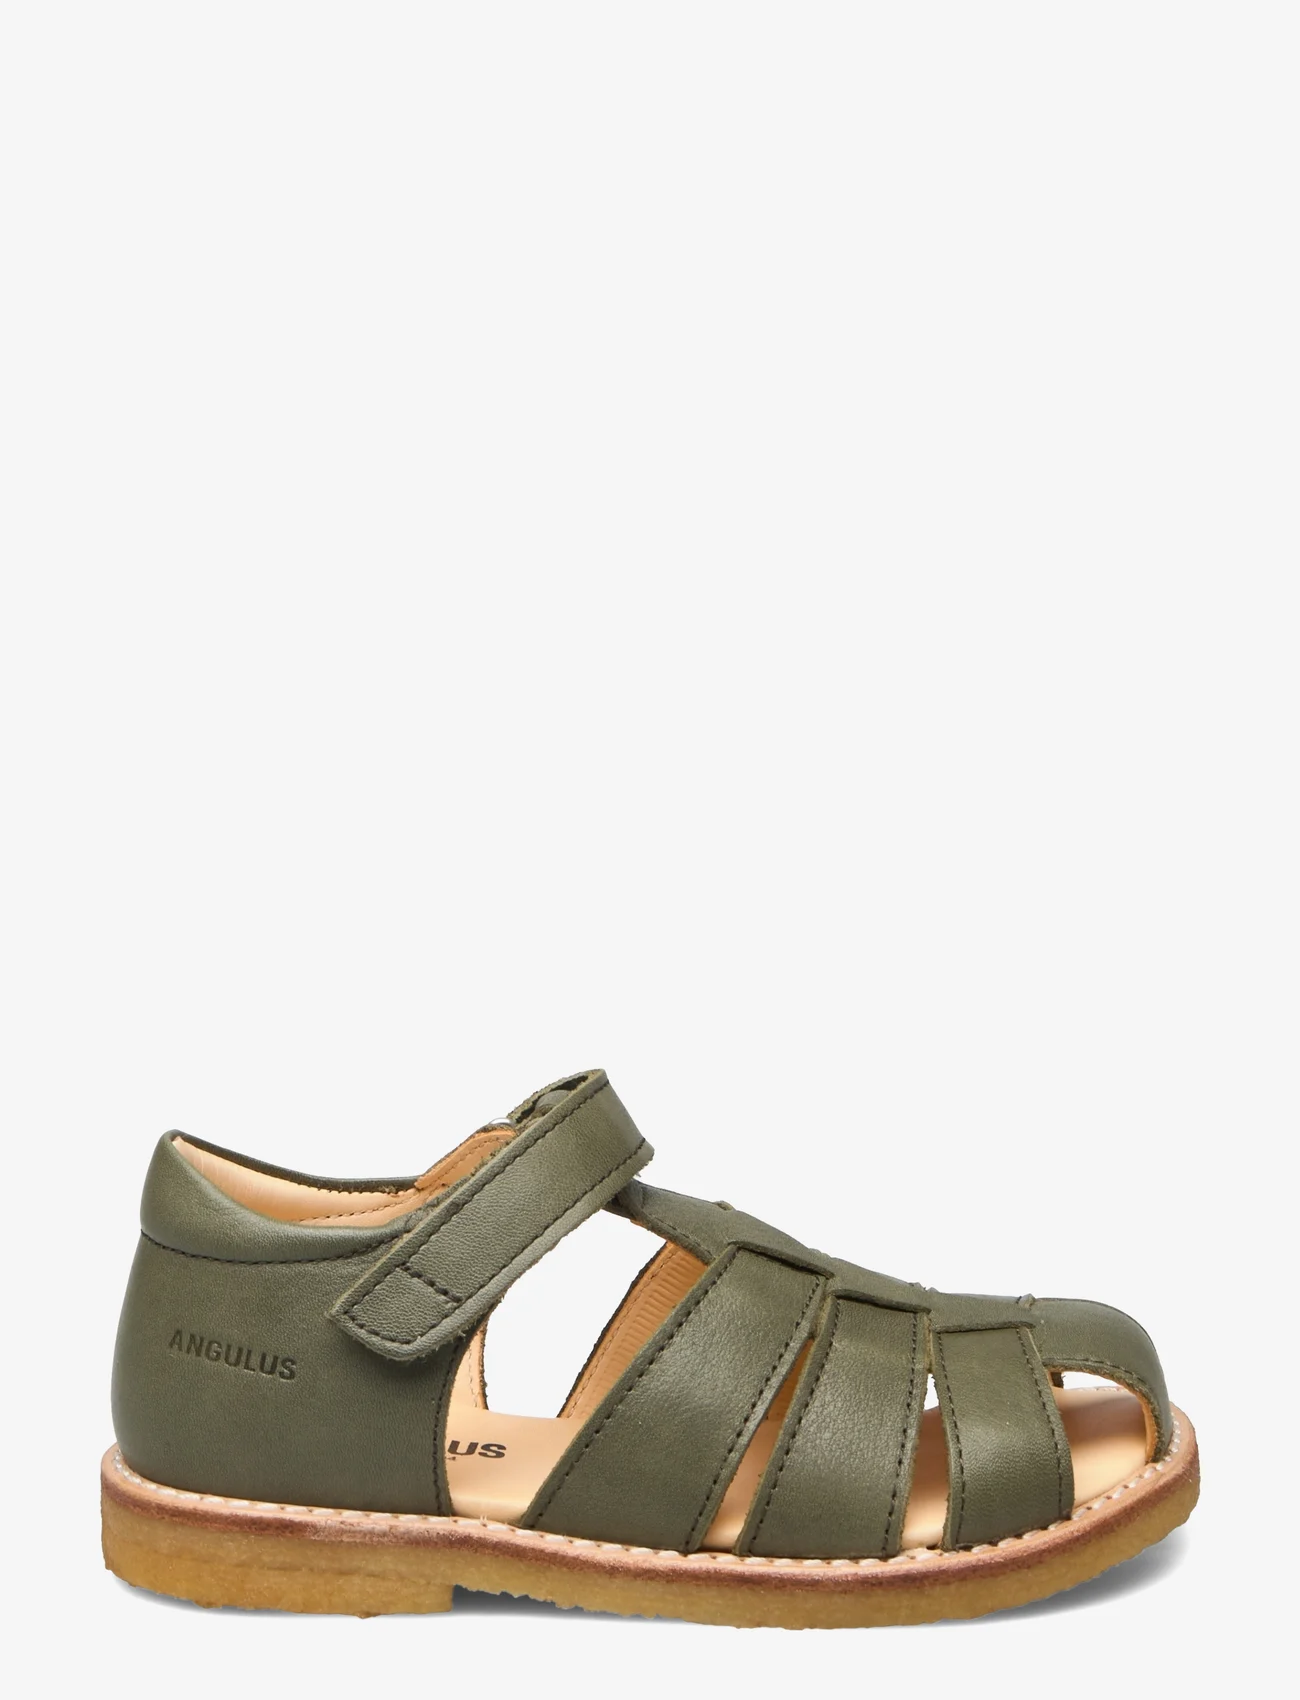 ANGULUS - Sandals - flat - closed toe - - des sandales - 1588 dark green - 1